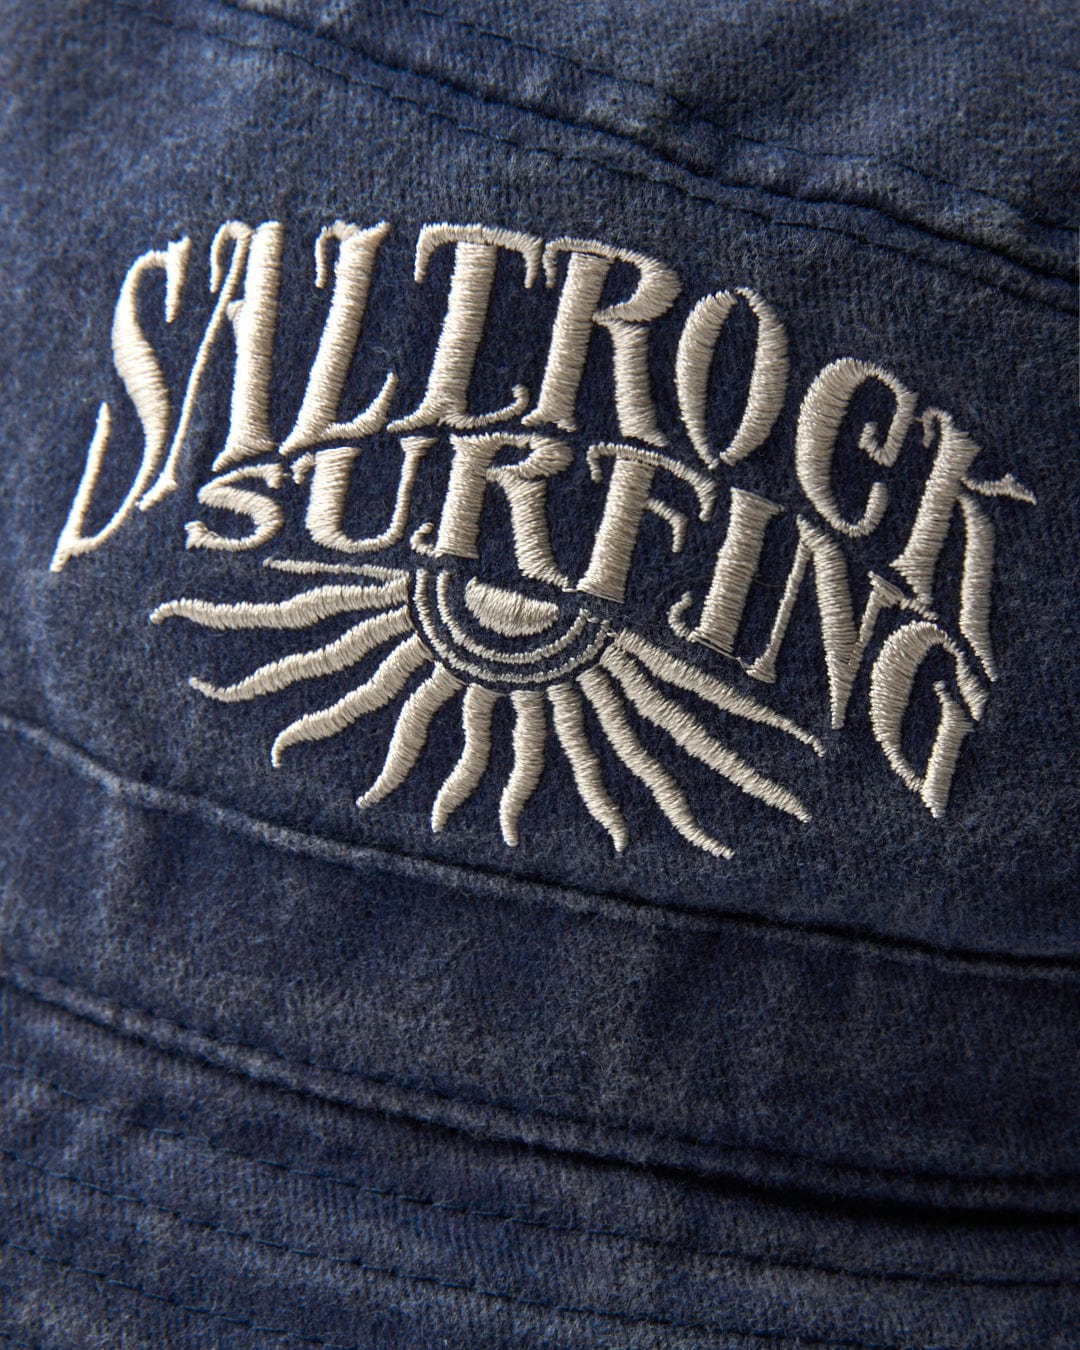 Embroidered Sunburst Bucket Hat - Dark Blue branding with sun design on blue fabric featuring ventilation.